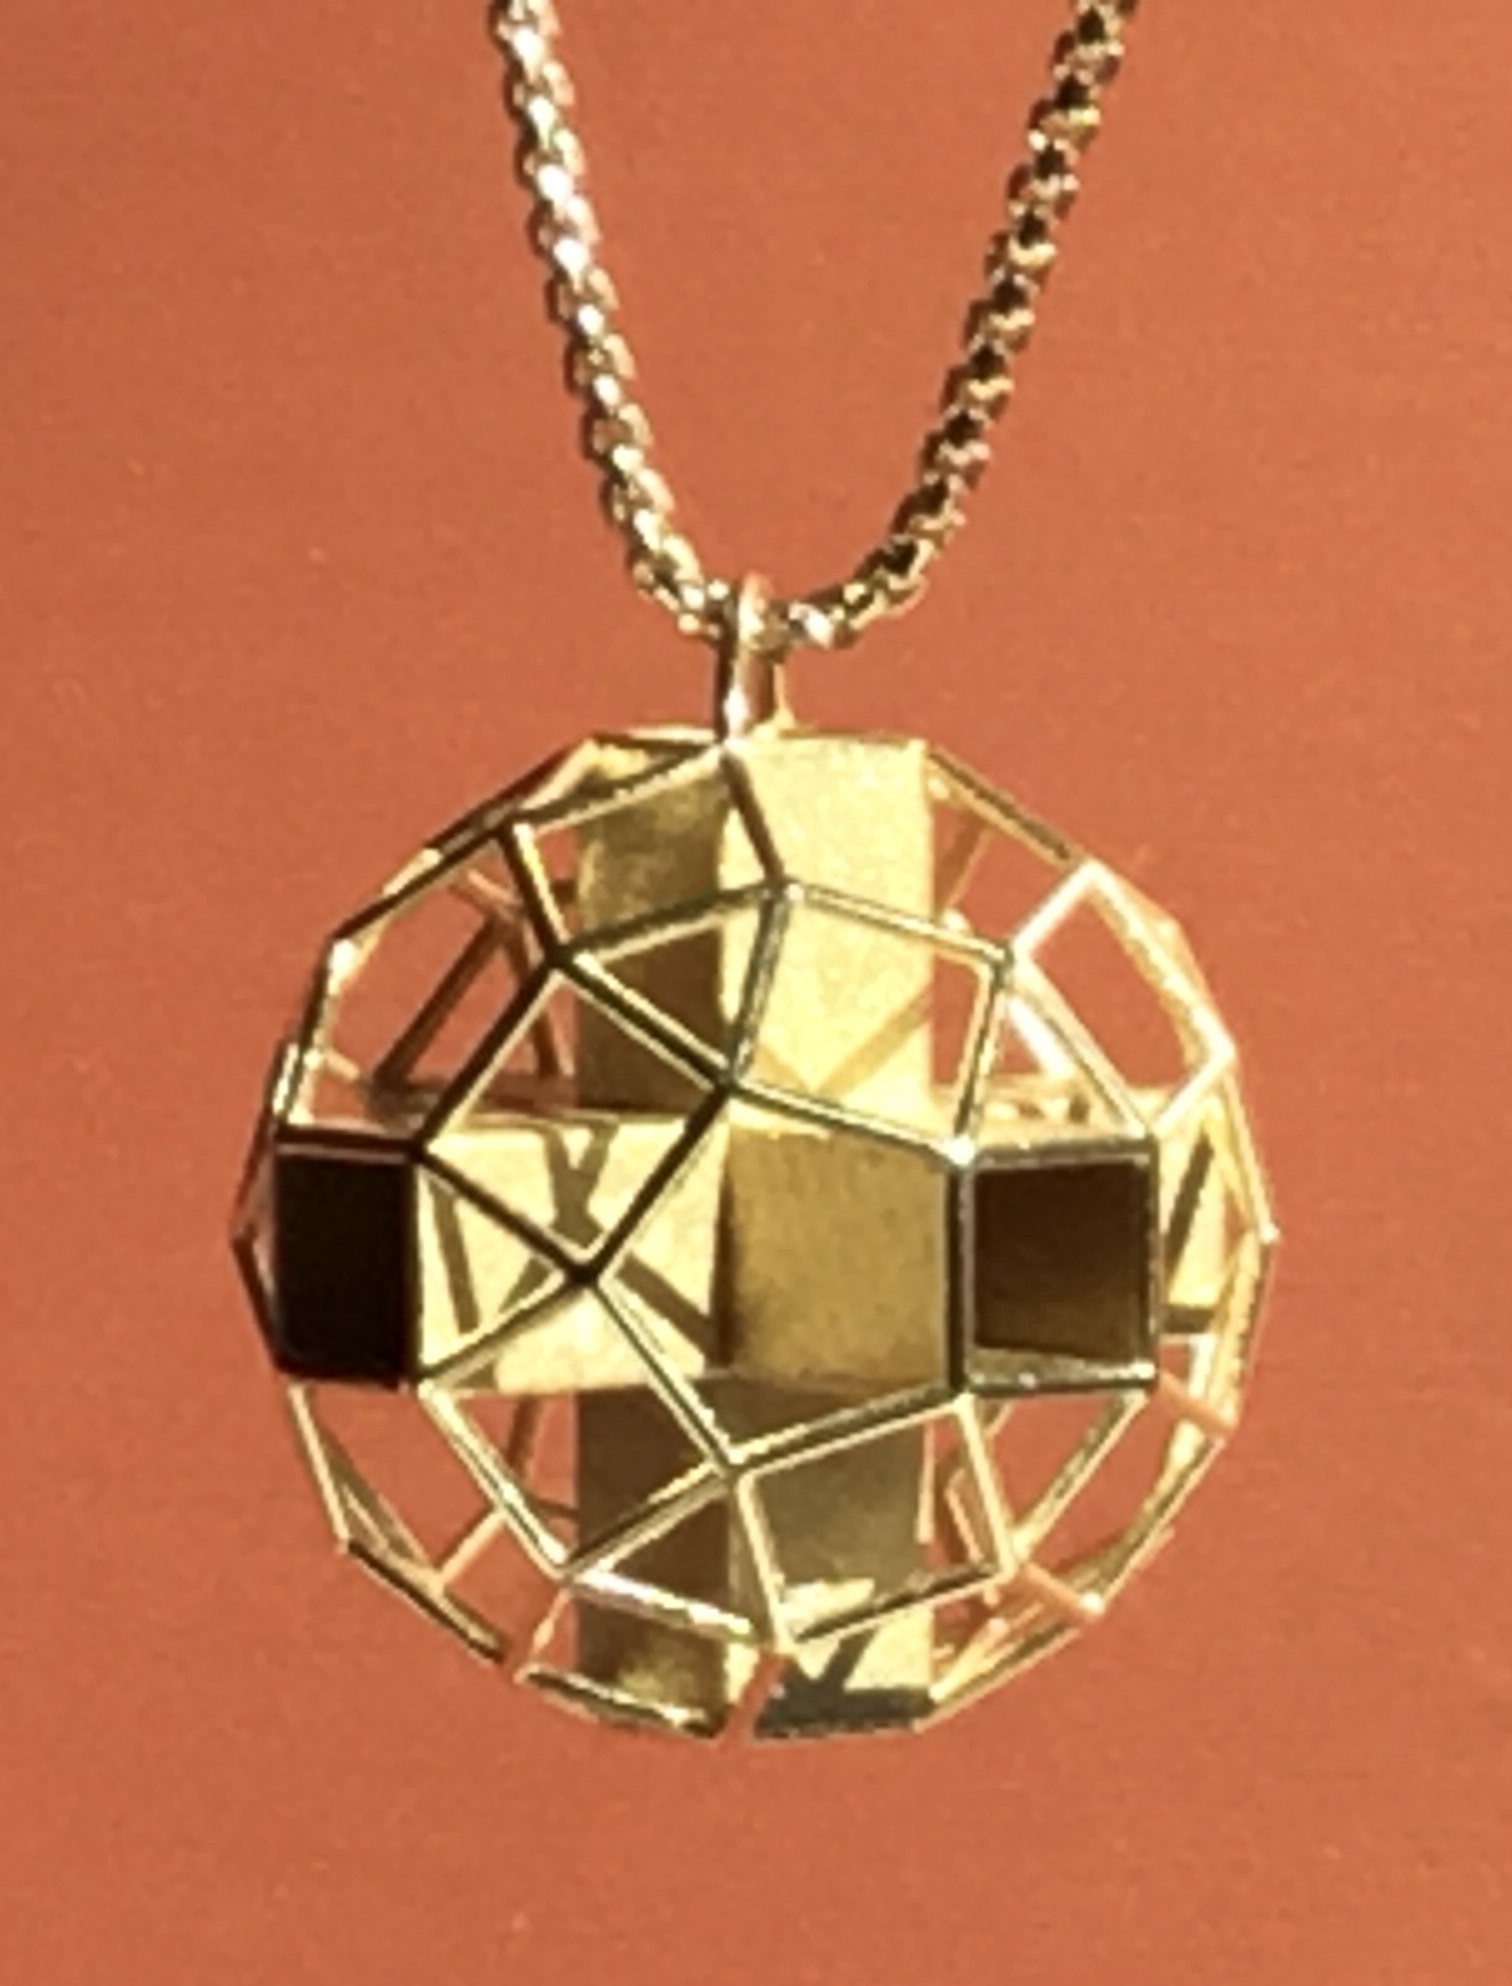 close up of pendant